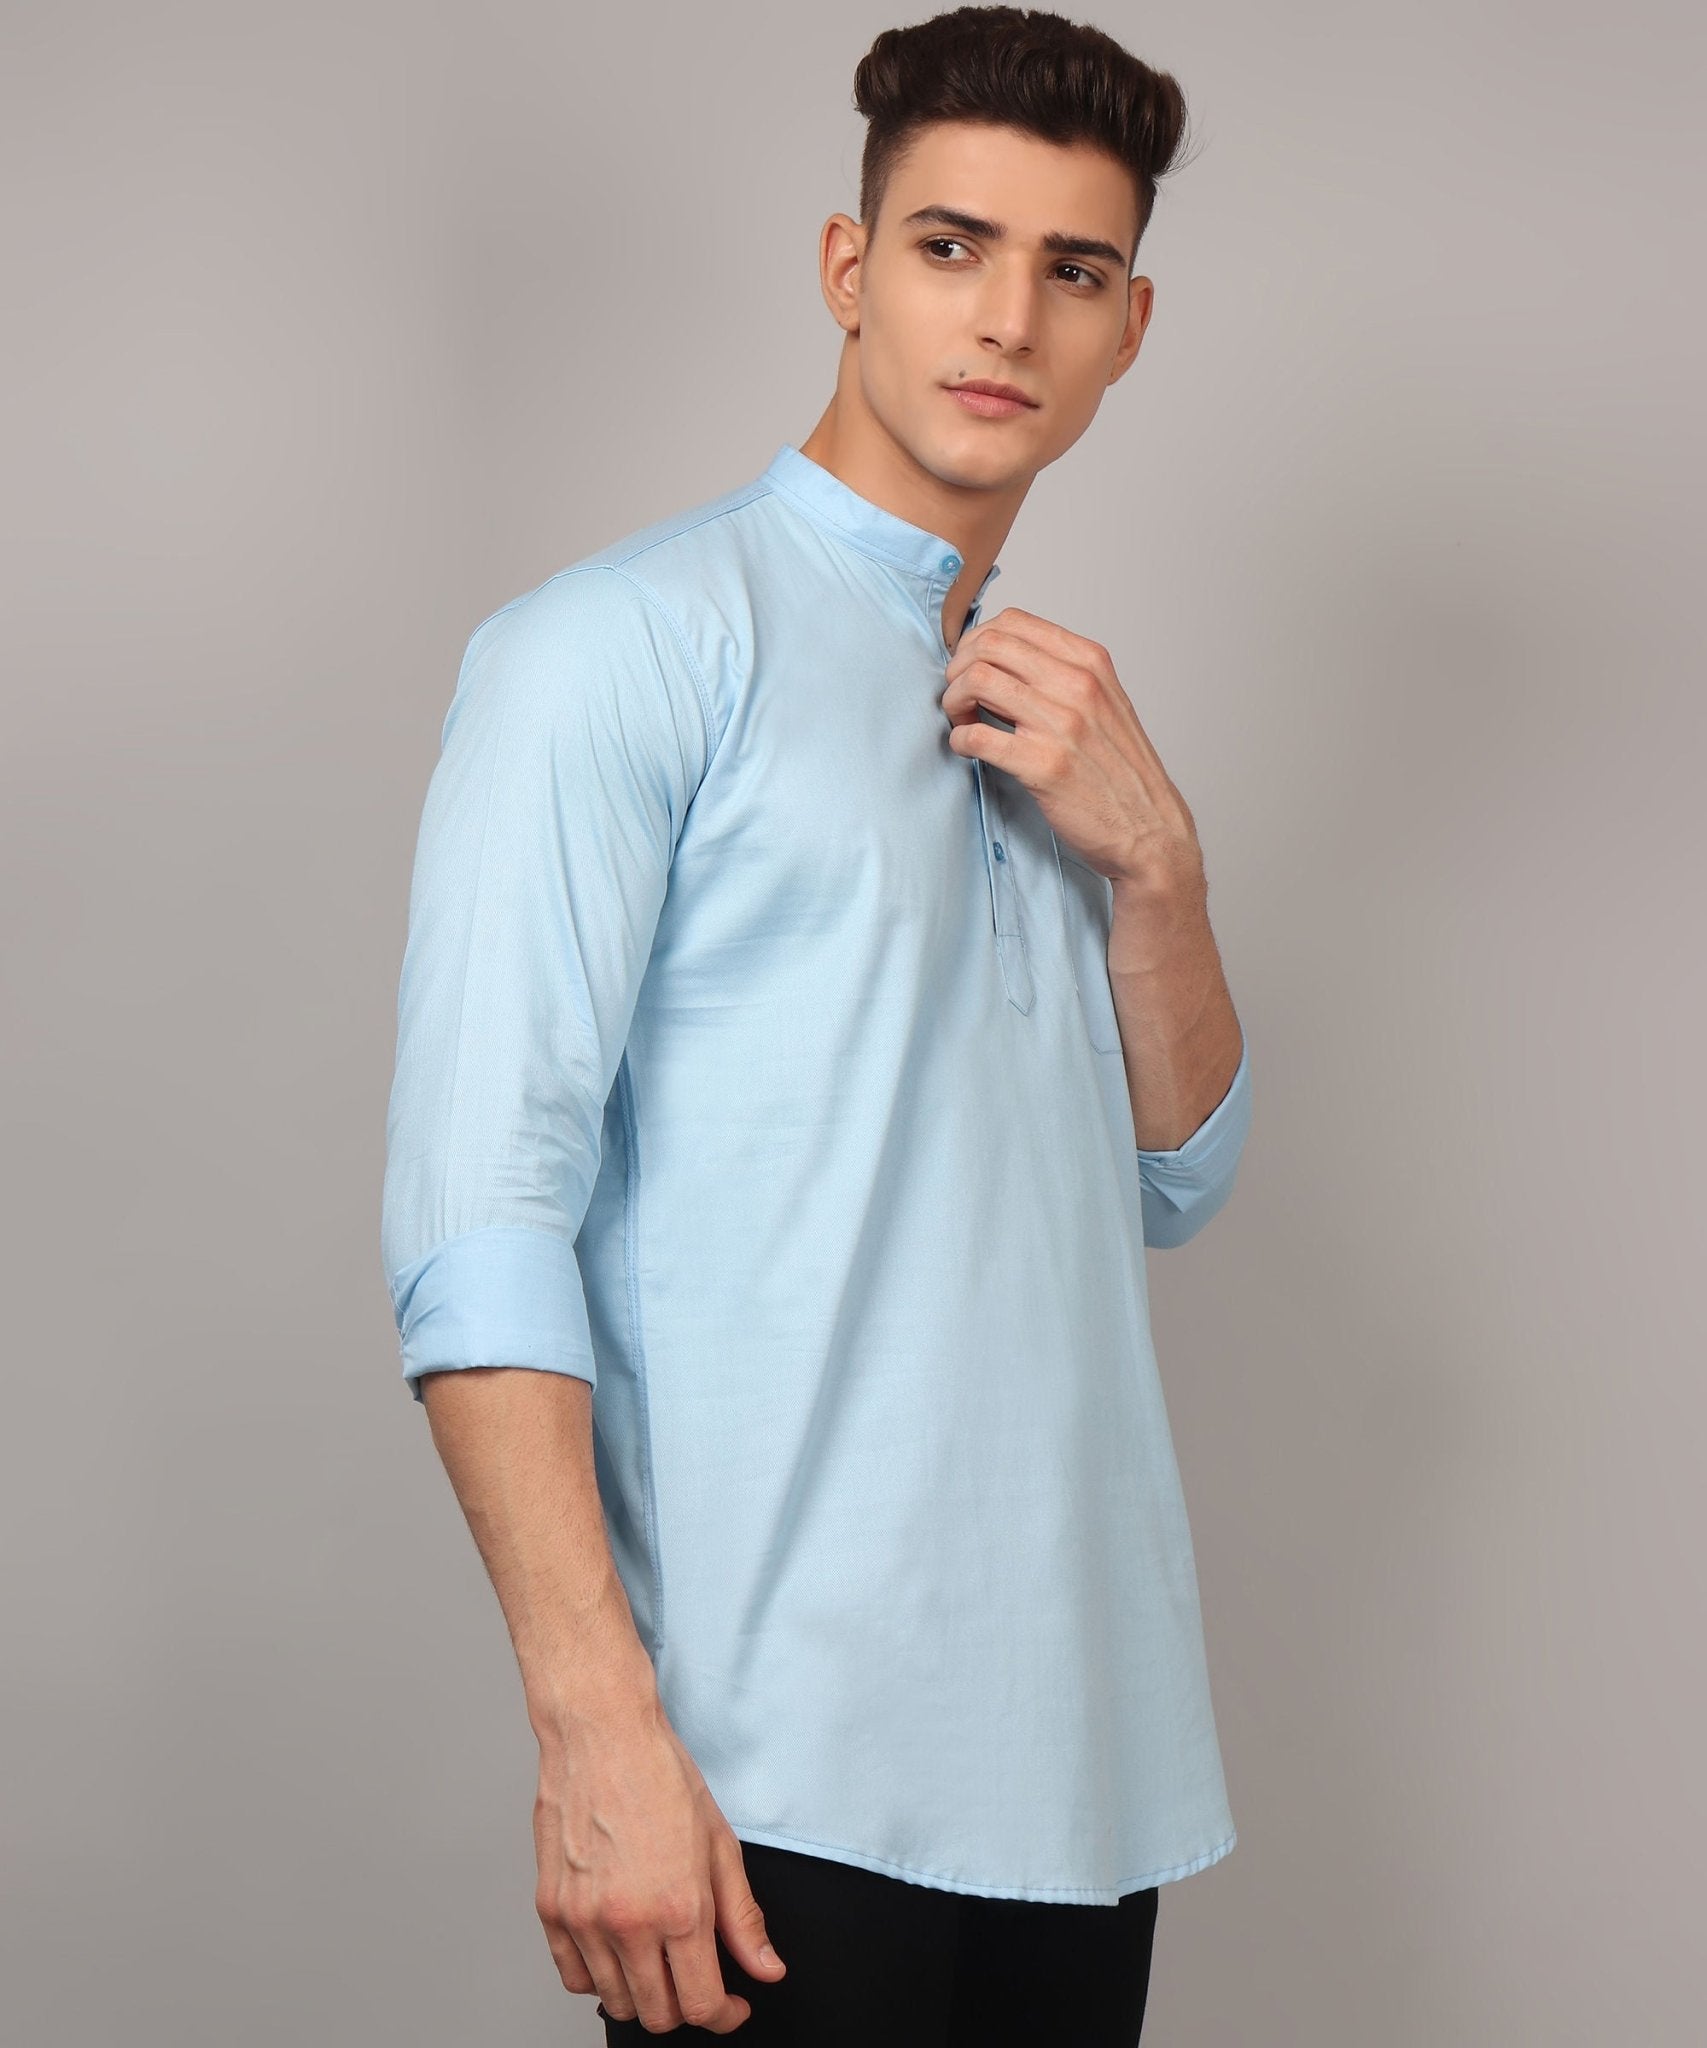 TryBuy Premium Cotton Made Trendy Ethnic Sky Blue Kurta for Men - TryBuy® USA🇺🇸